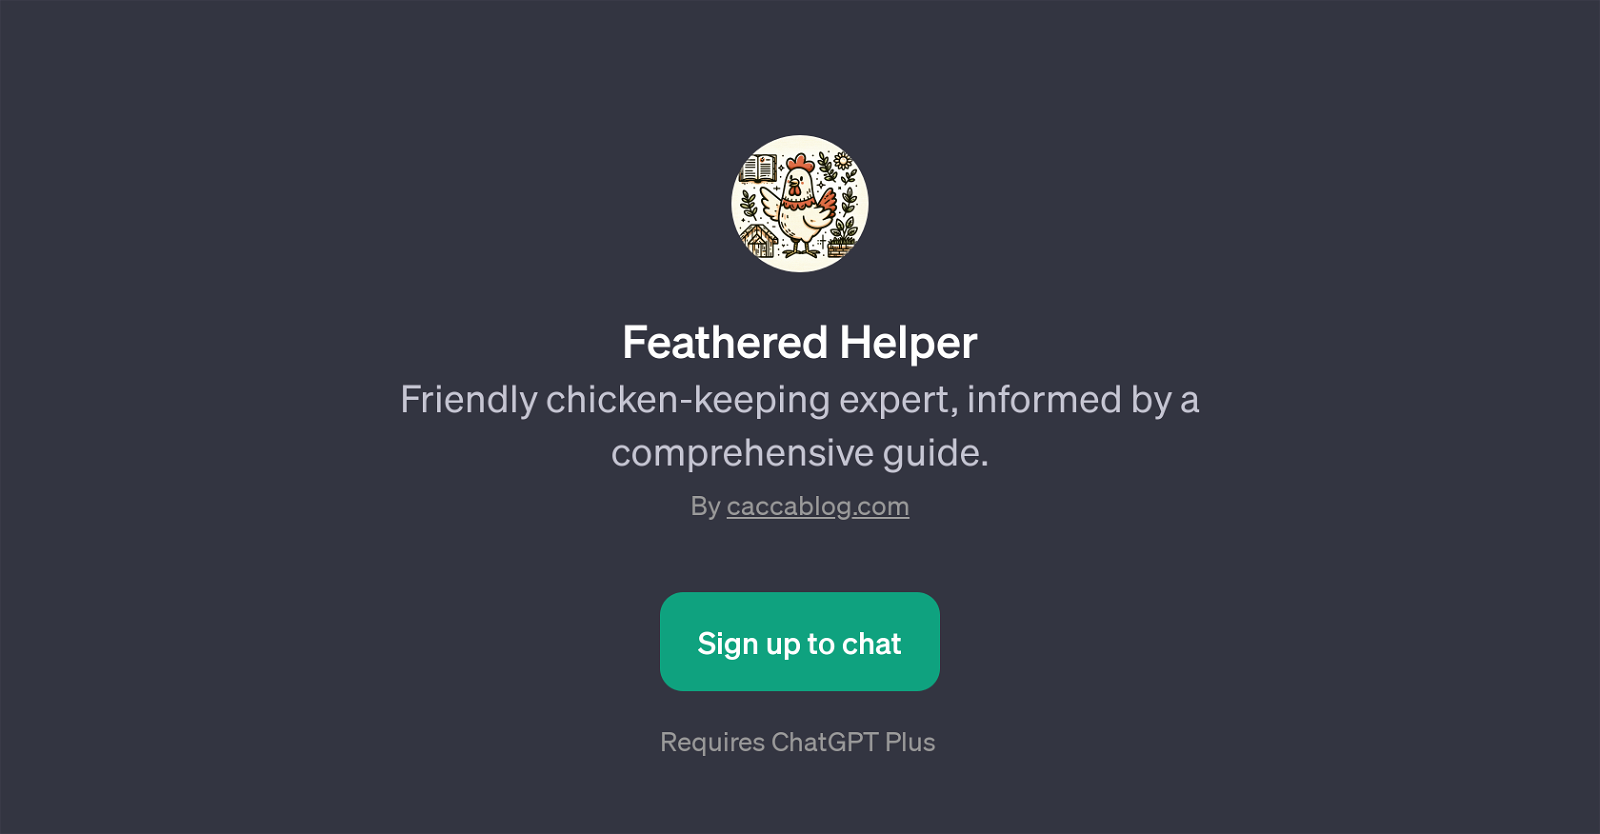 Feathered Helper website